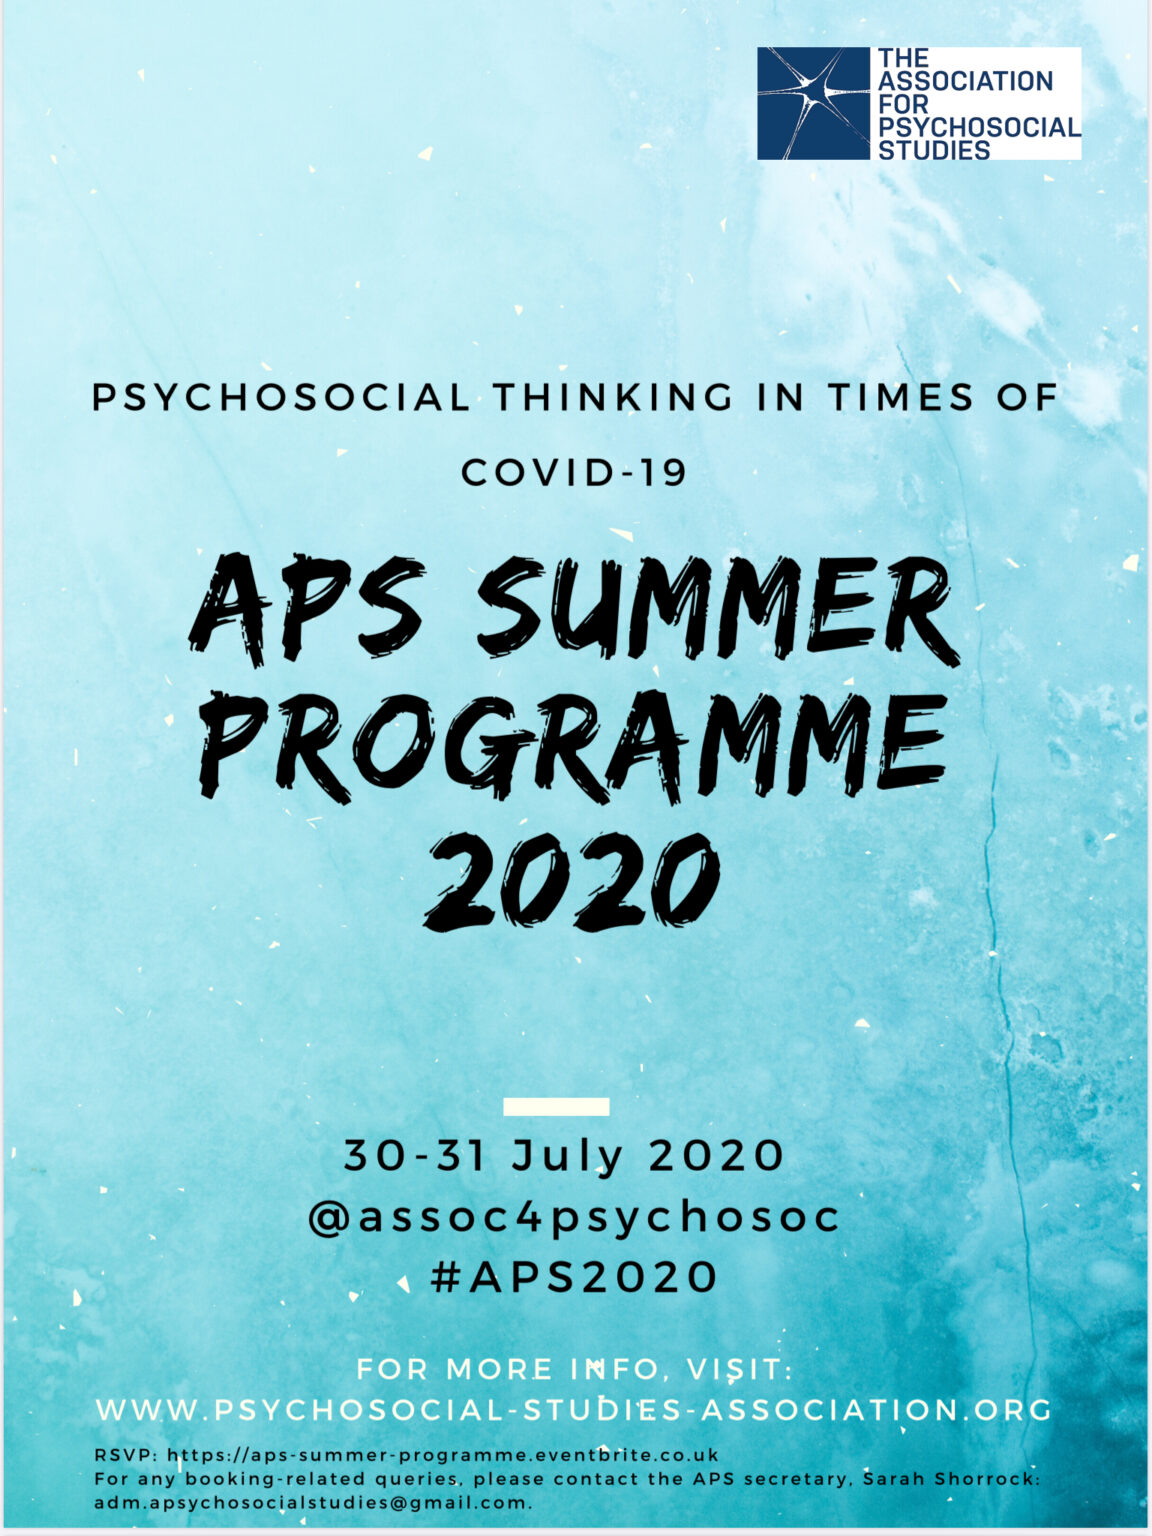 APS Summer Programme 2020 The Association for Psychosocial Studies